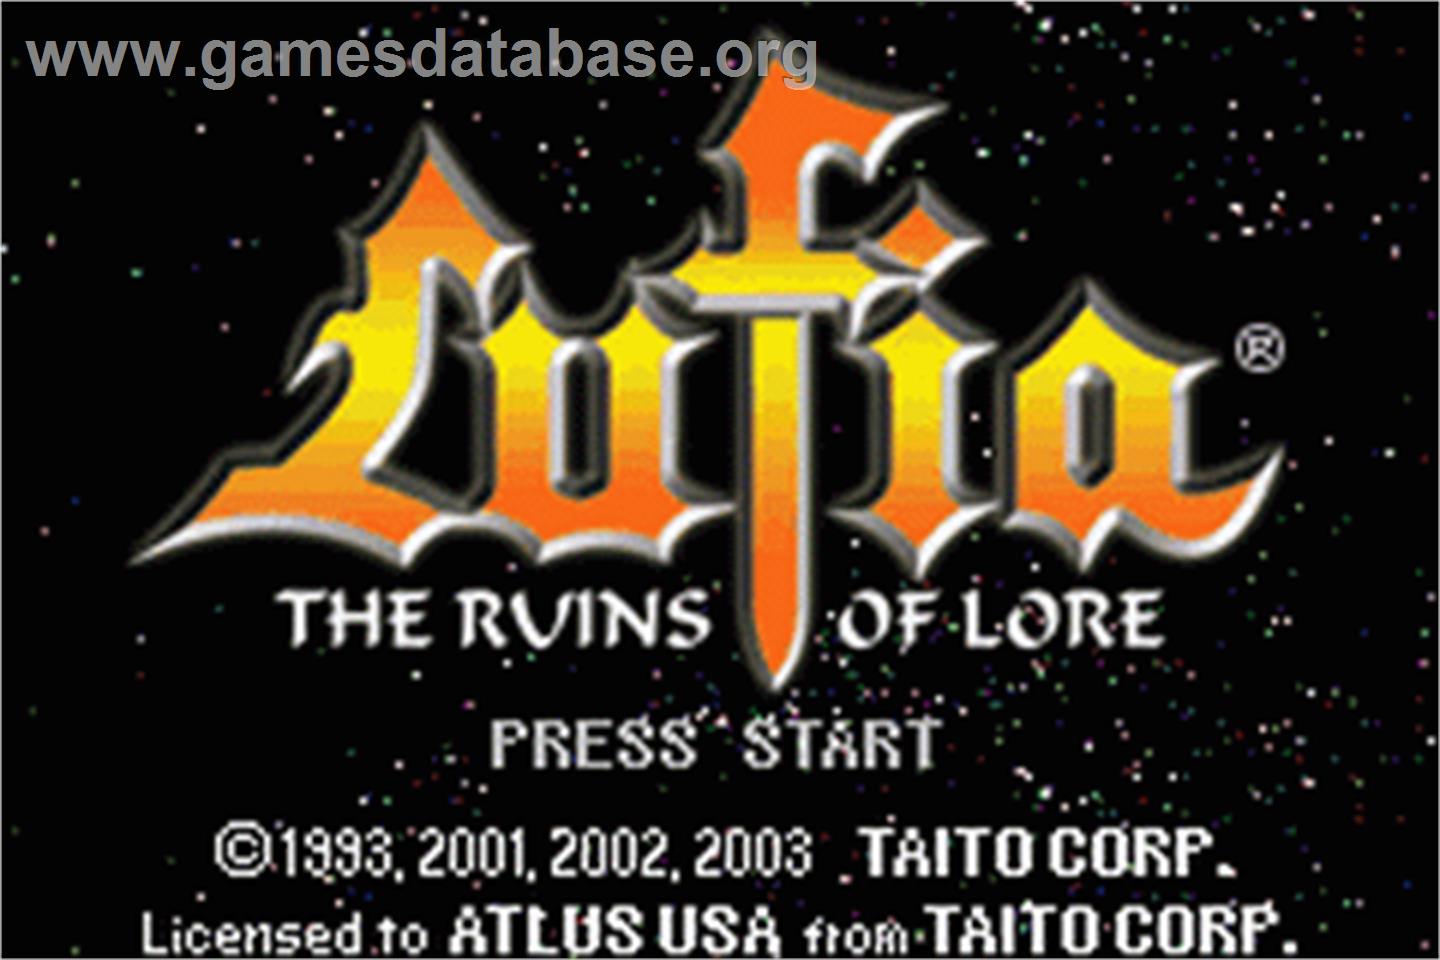 Lufia: The Ruins of Lore - Nintendo Game Boy Advance - Artwork - Title Screen